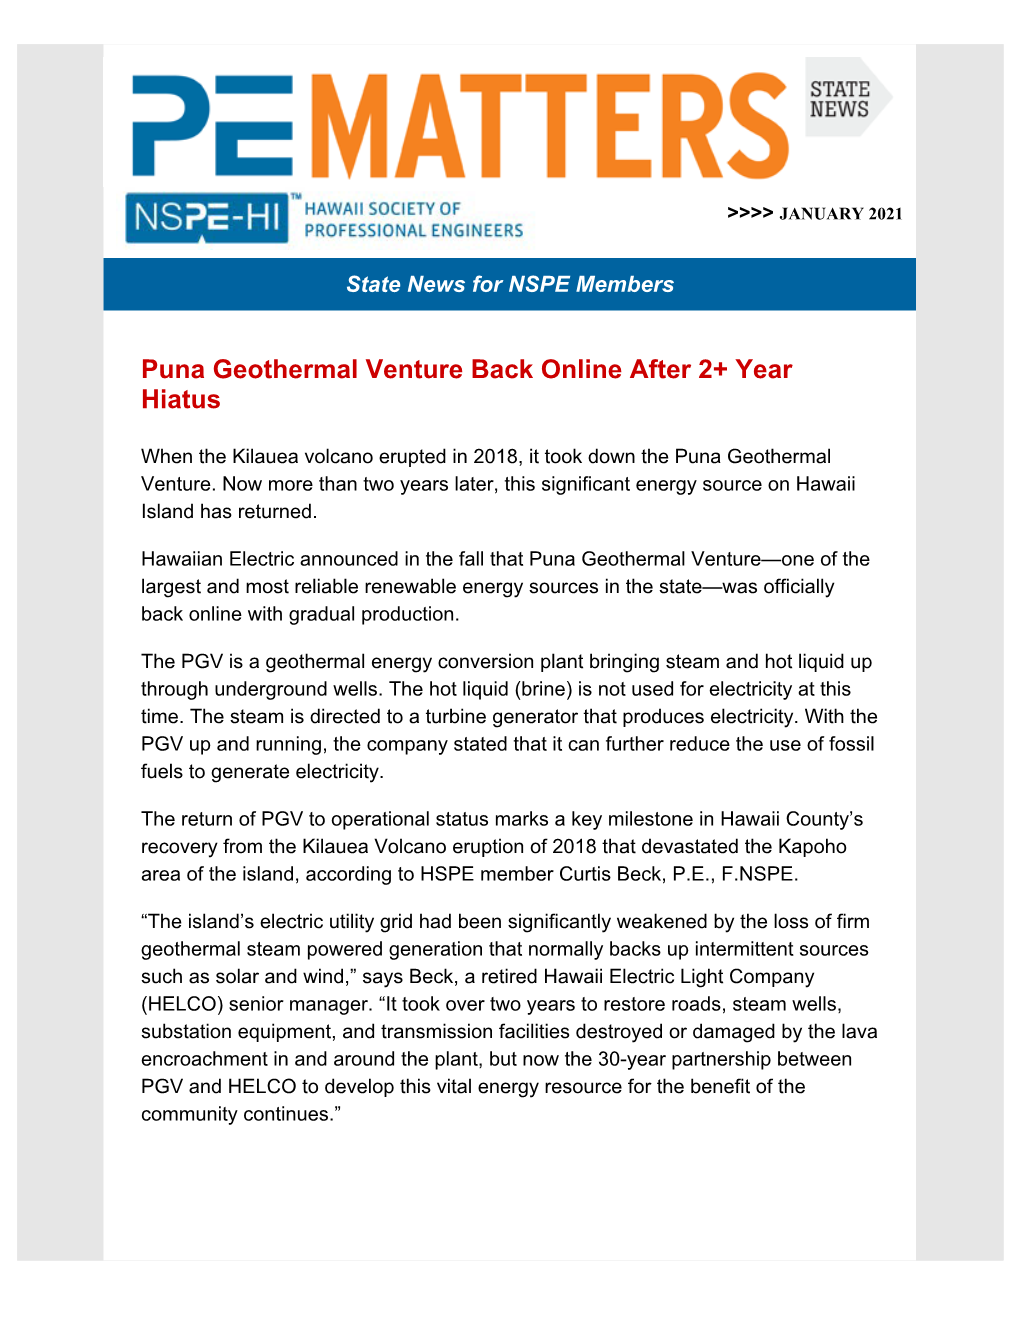 Puna Geothermal Venture Back Online After 2+ Year Hiatus